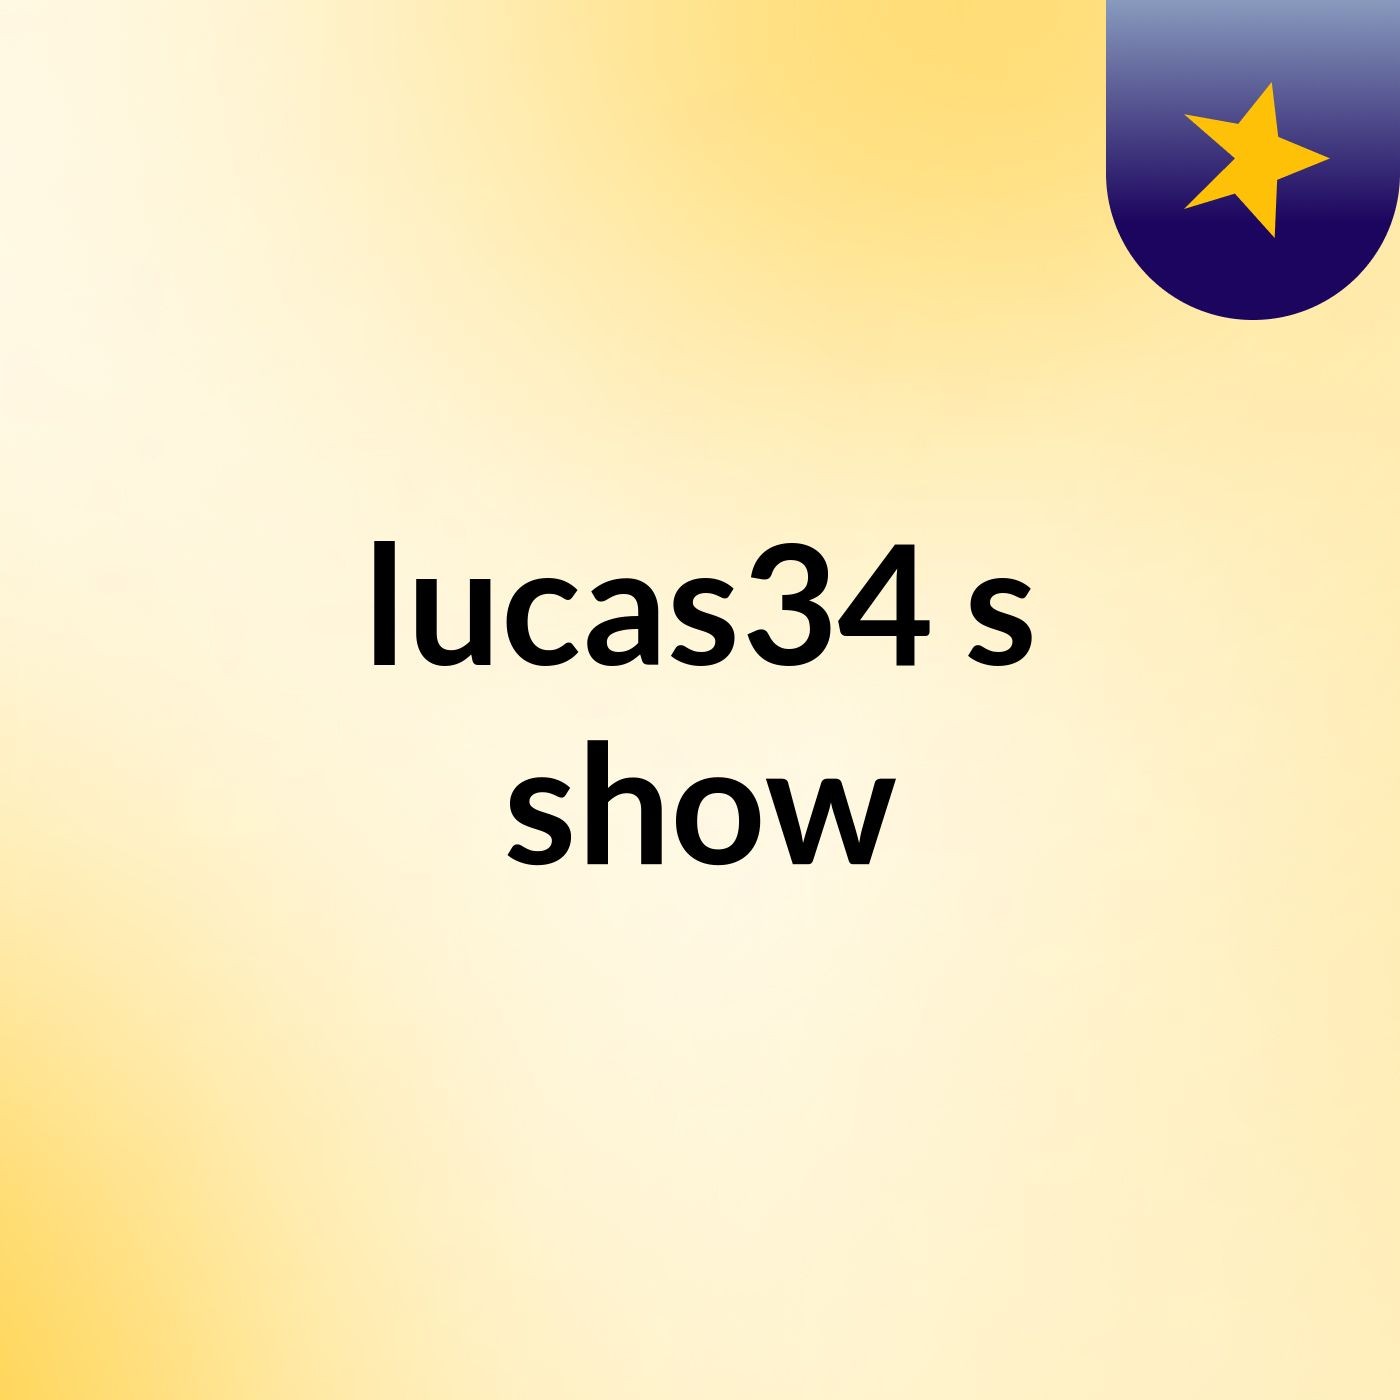 lucas34's show